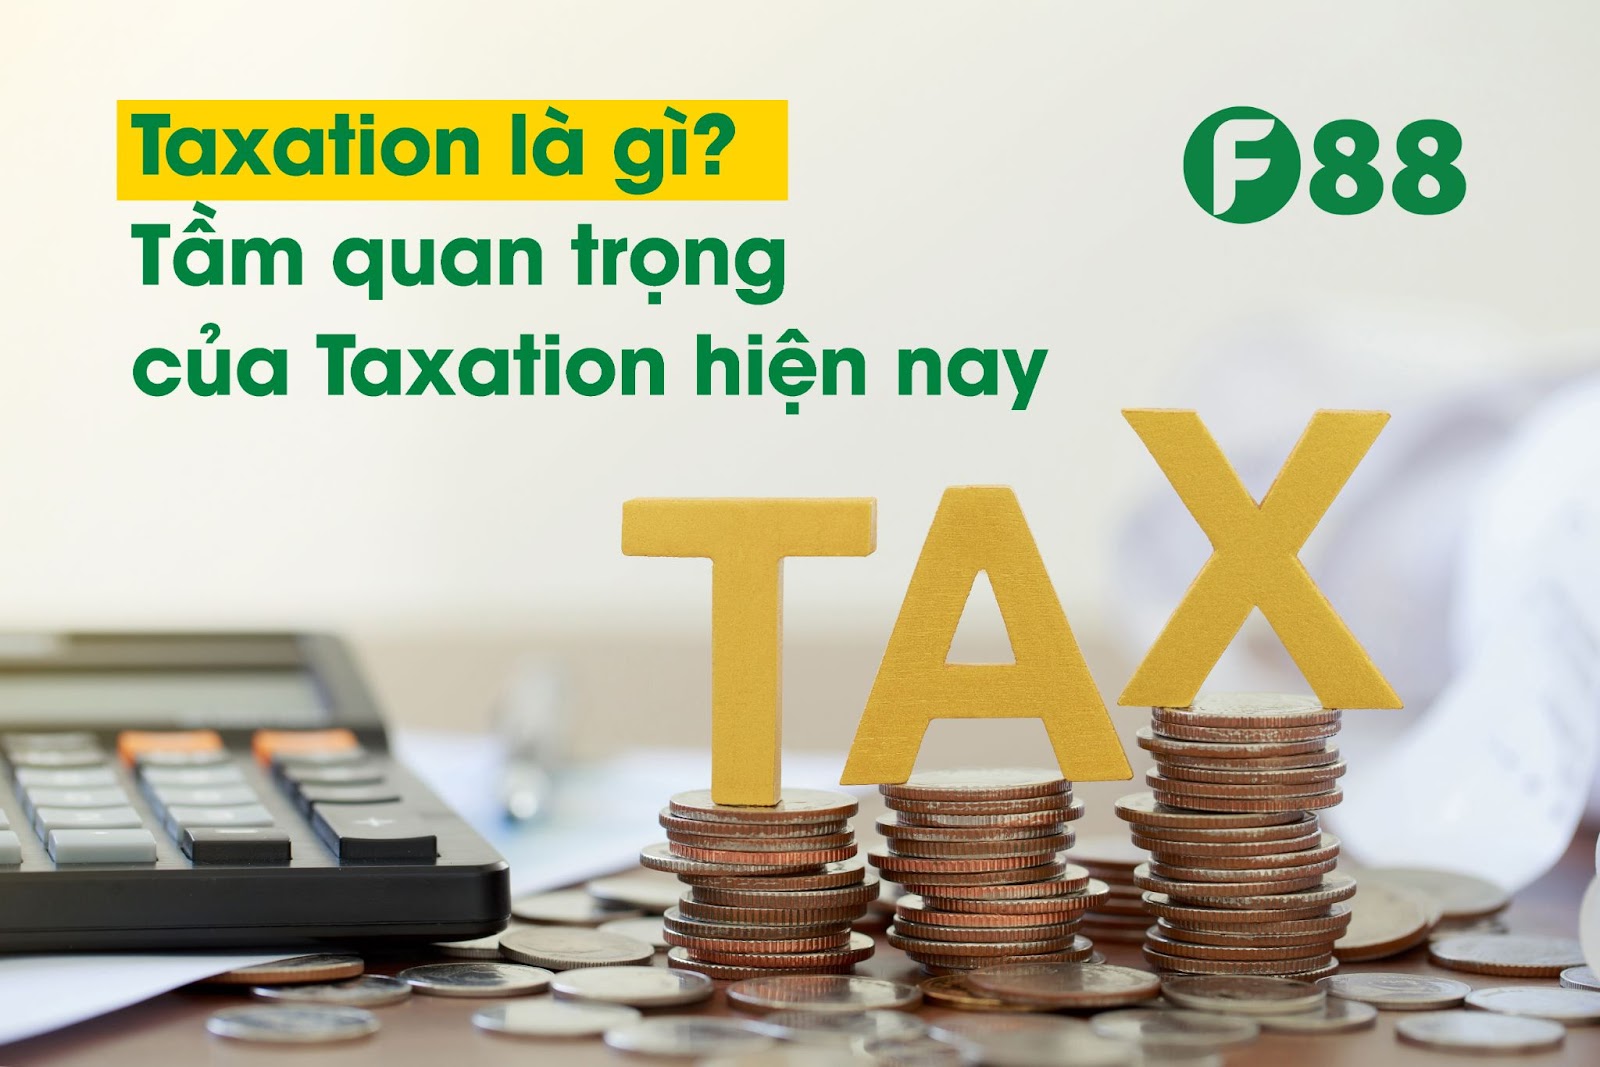 Taxation là gì?